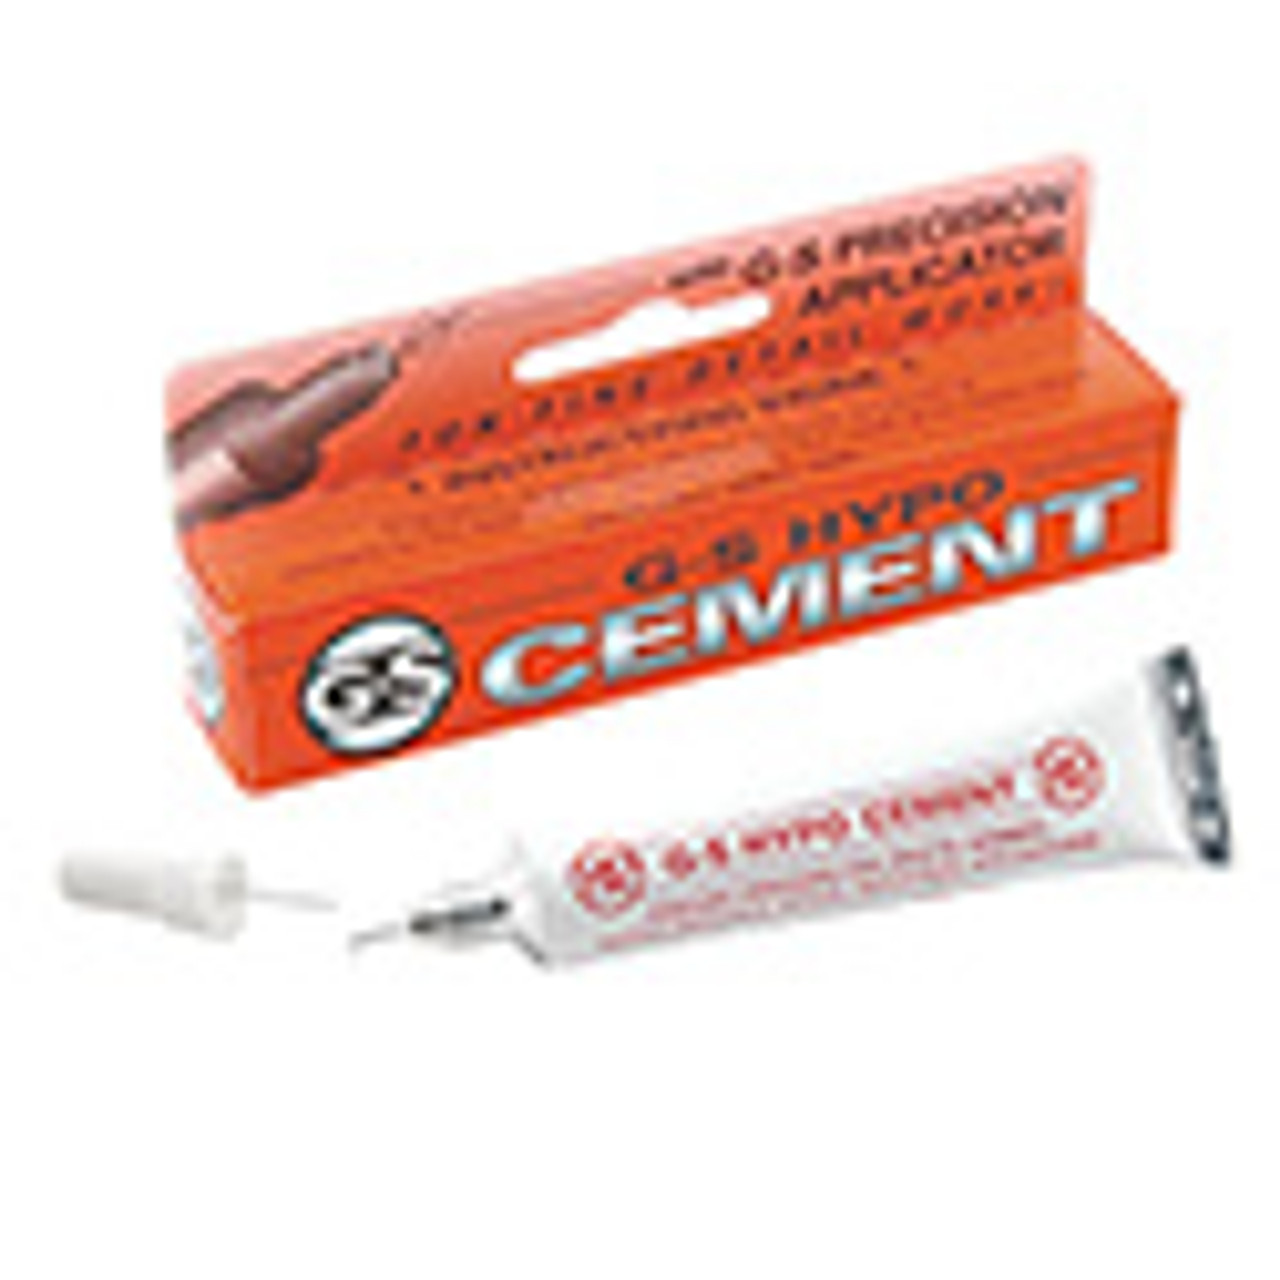 G-S Hypo Cement 1/3 fluid oz